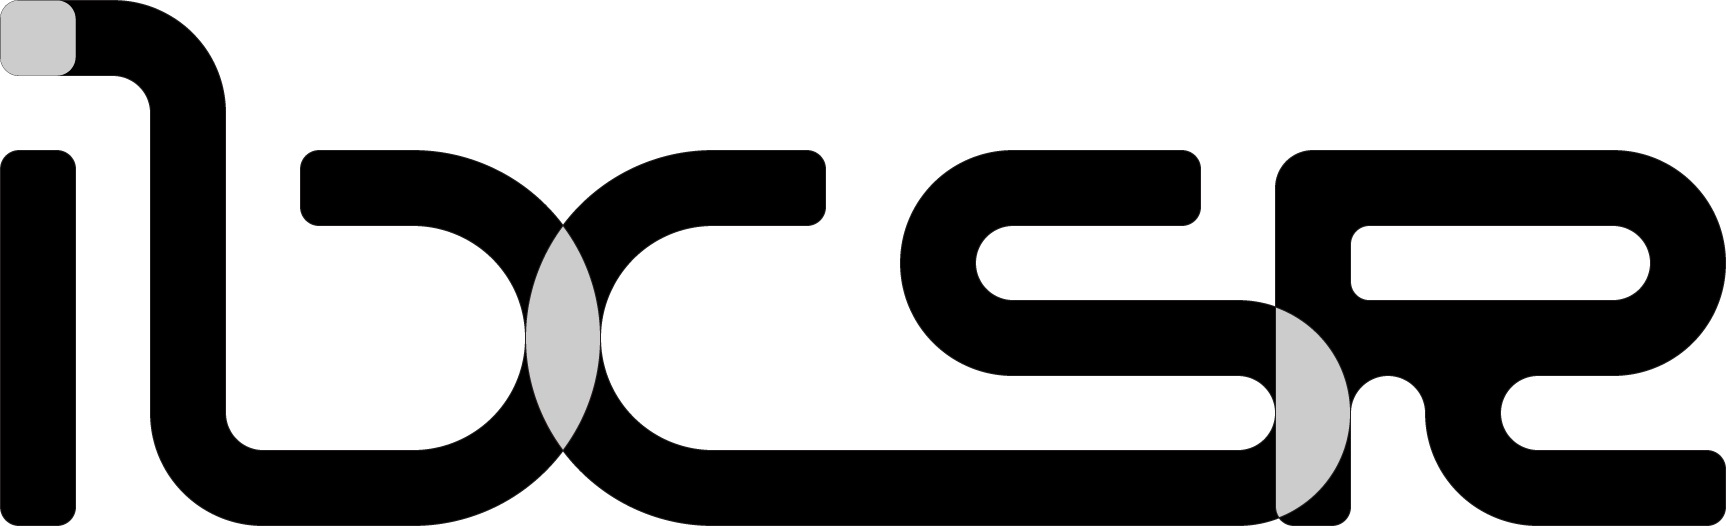 ibcsr logo without name bw